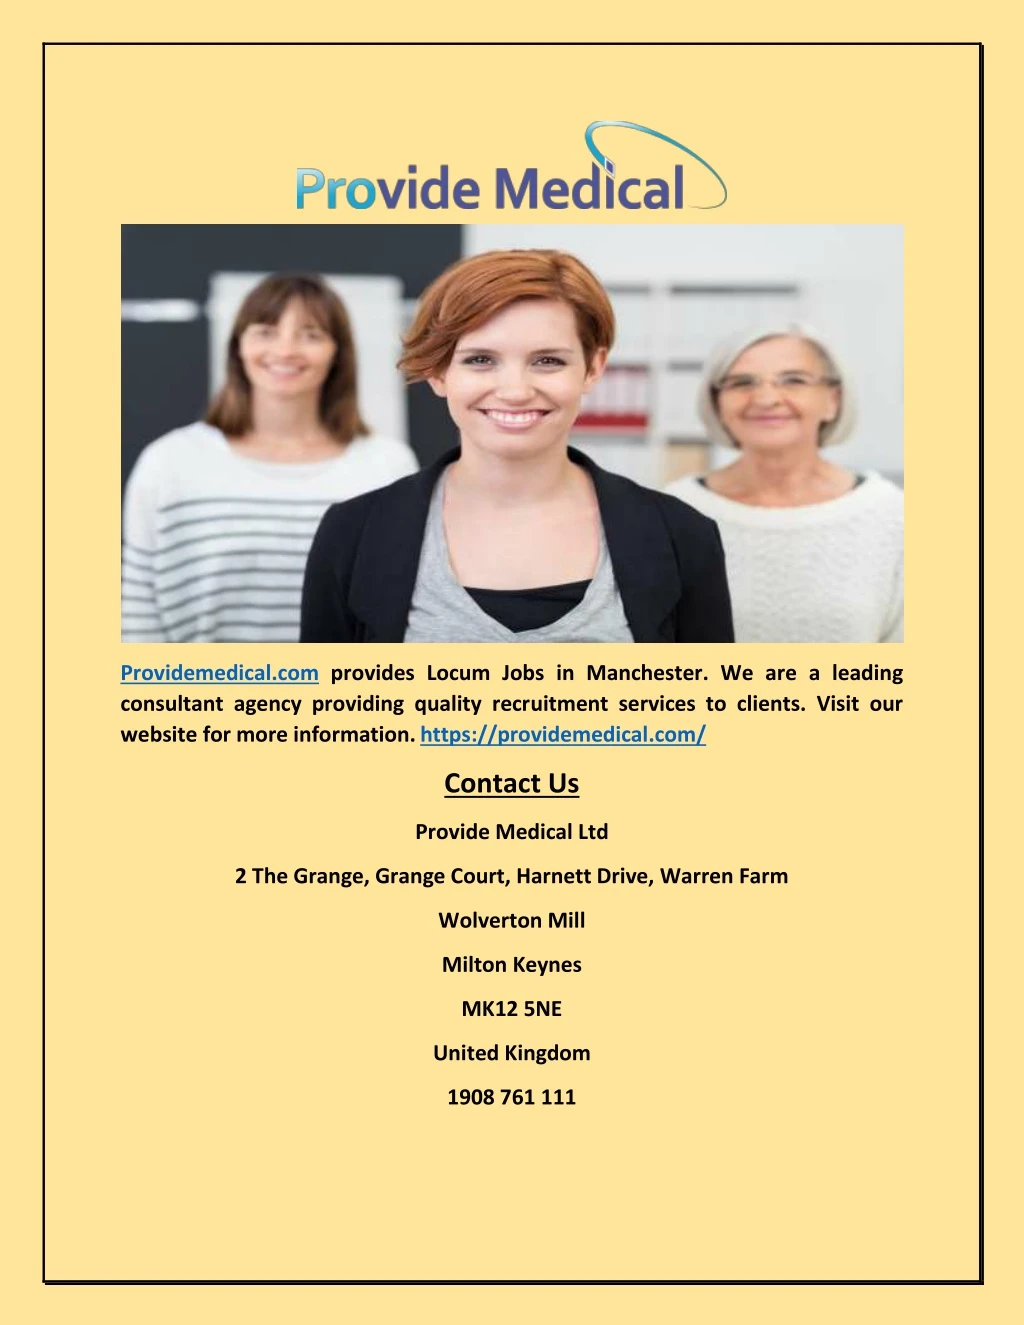 providemedical com provides locum jobs